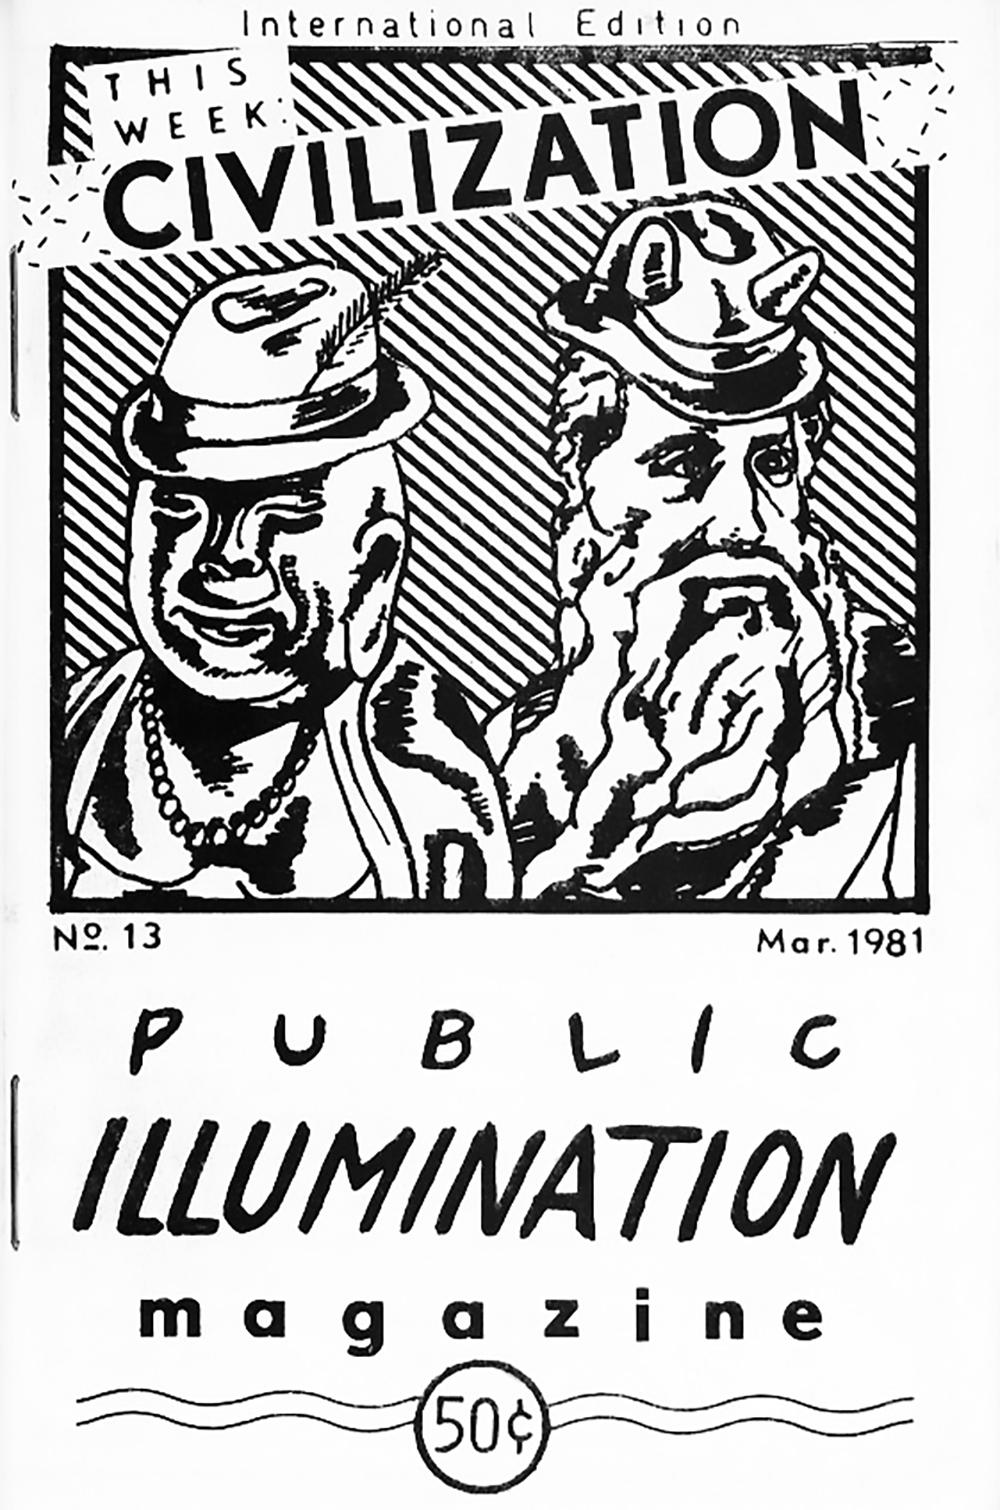 public illumination magazine